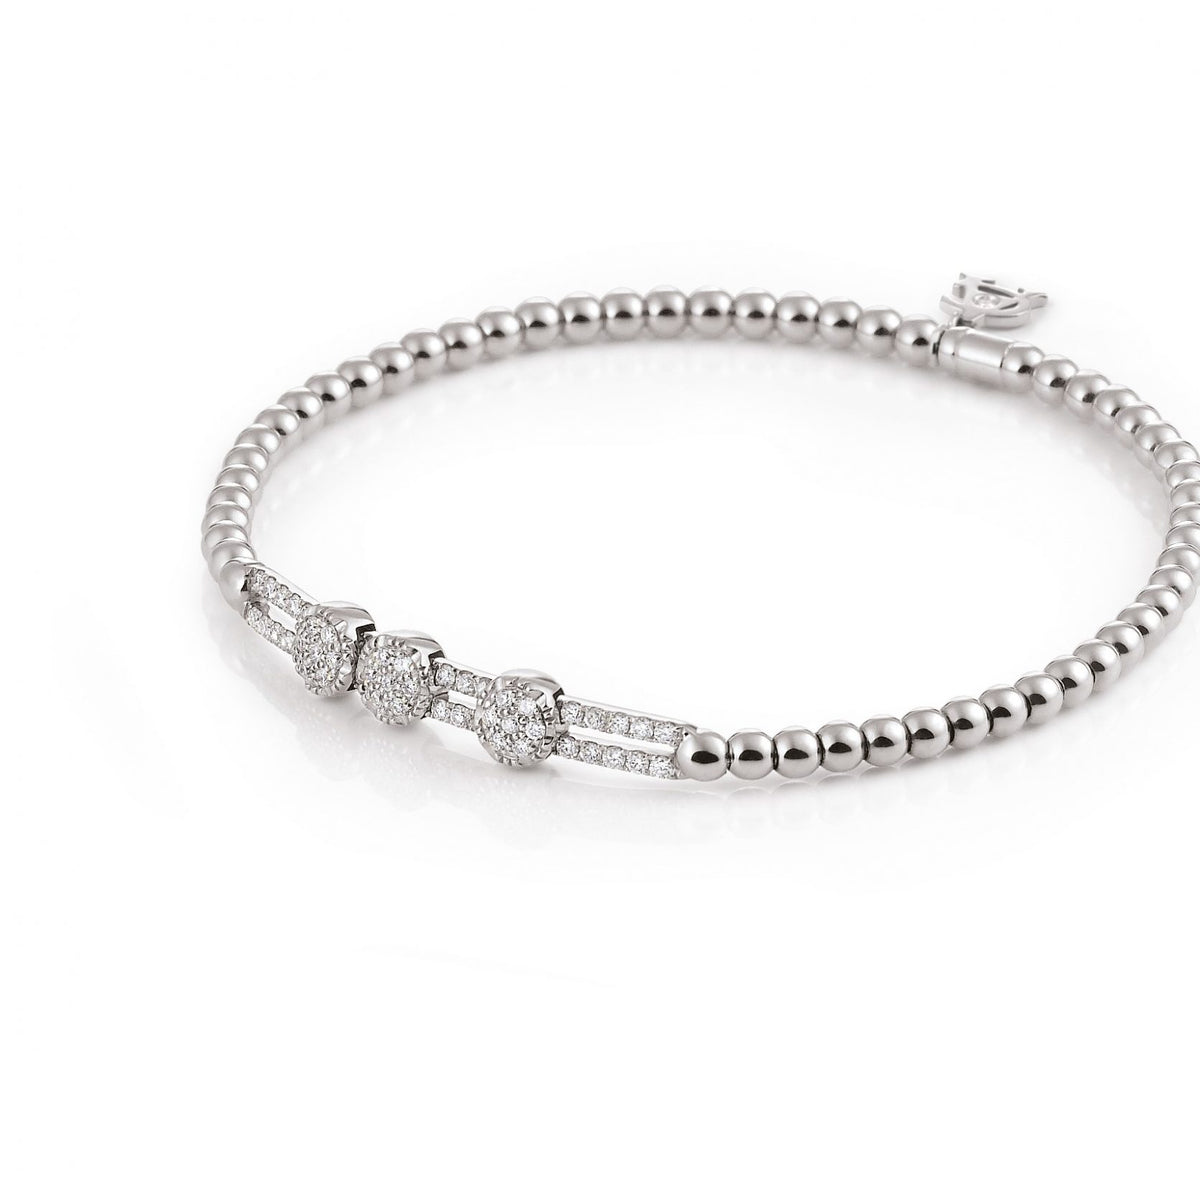 Al Coro Stretchy Bracelet in 18k White Gold with 67 Brilliant Diamonds - Orsini Jewellers